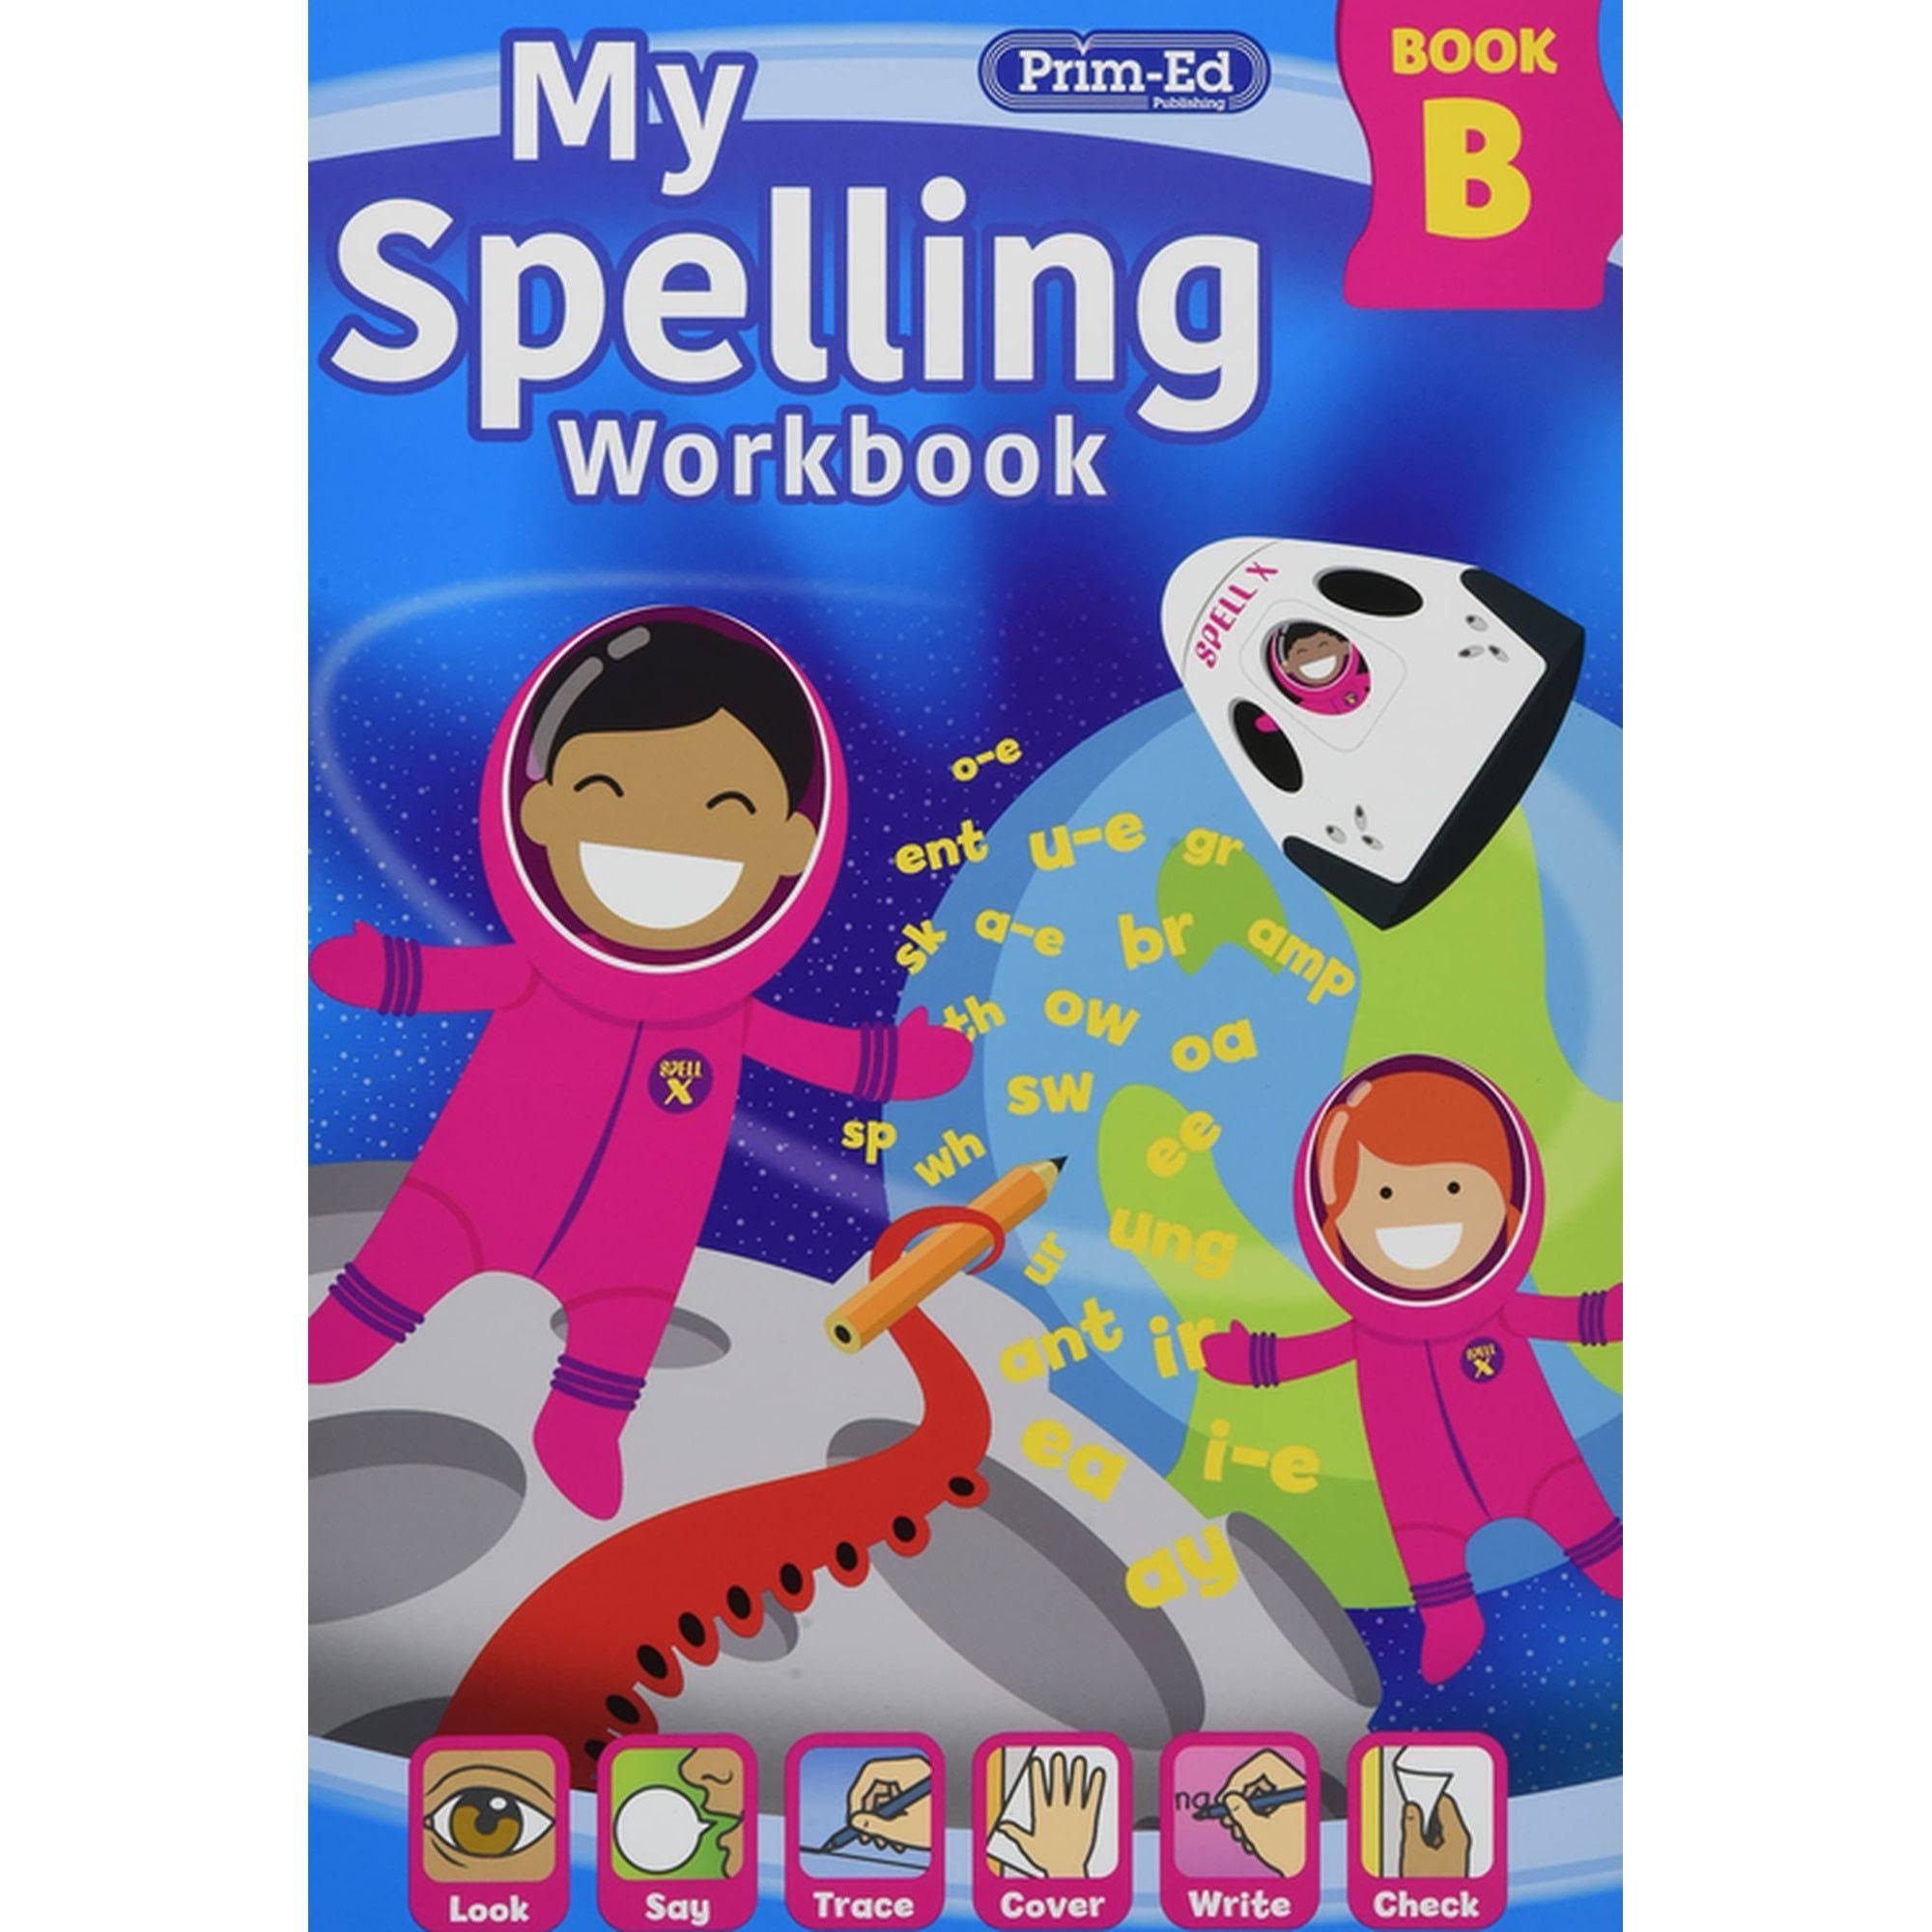 My Spelling Workbook Book B [Book]